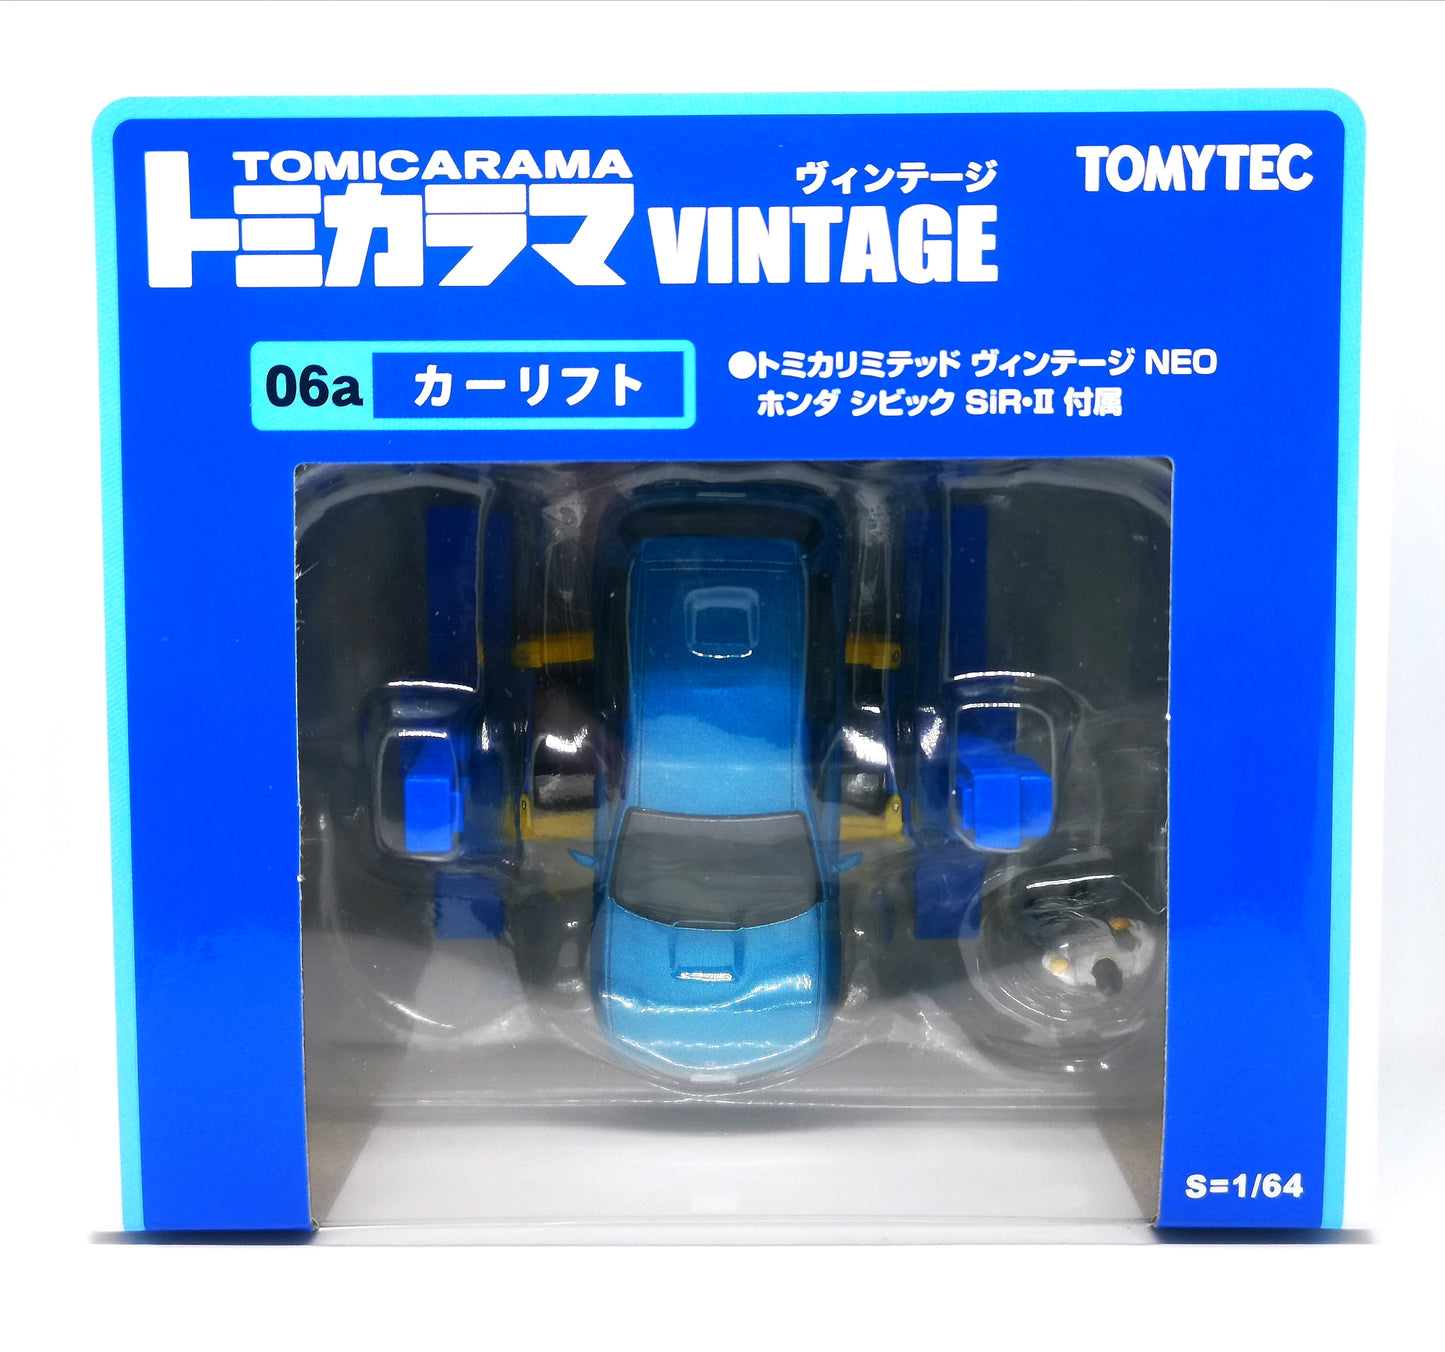 Tomytec Limited Vintage
Neo Diocolle64 Car Snap
06a
Car Lift Diorama With Honda Civic SiR-II Takara Tomy